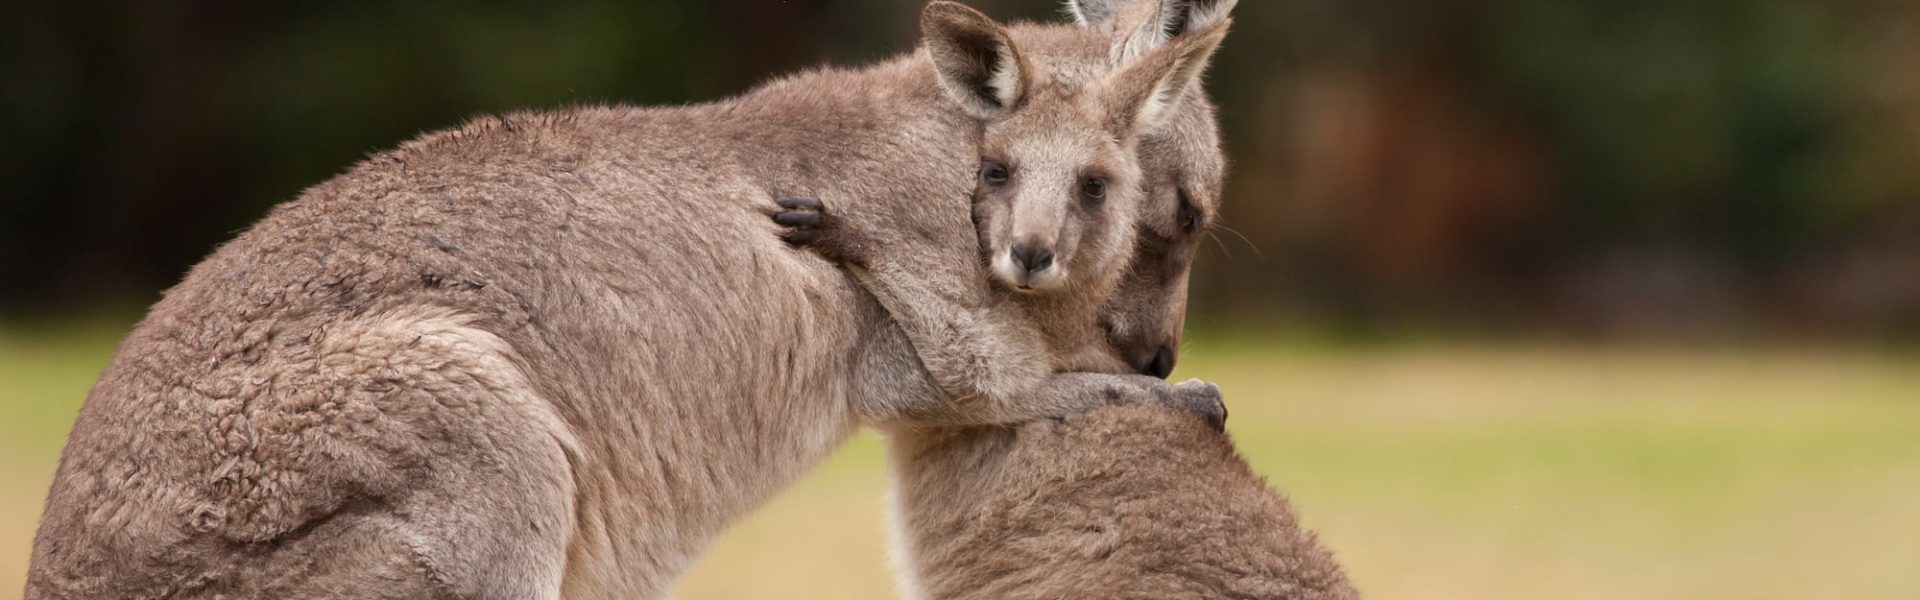 Kangaroo Shooting - Animals Australia